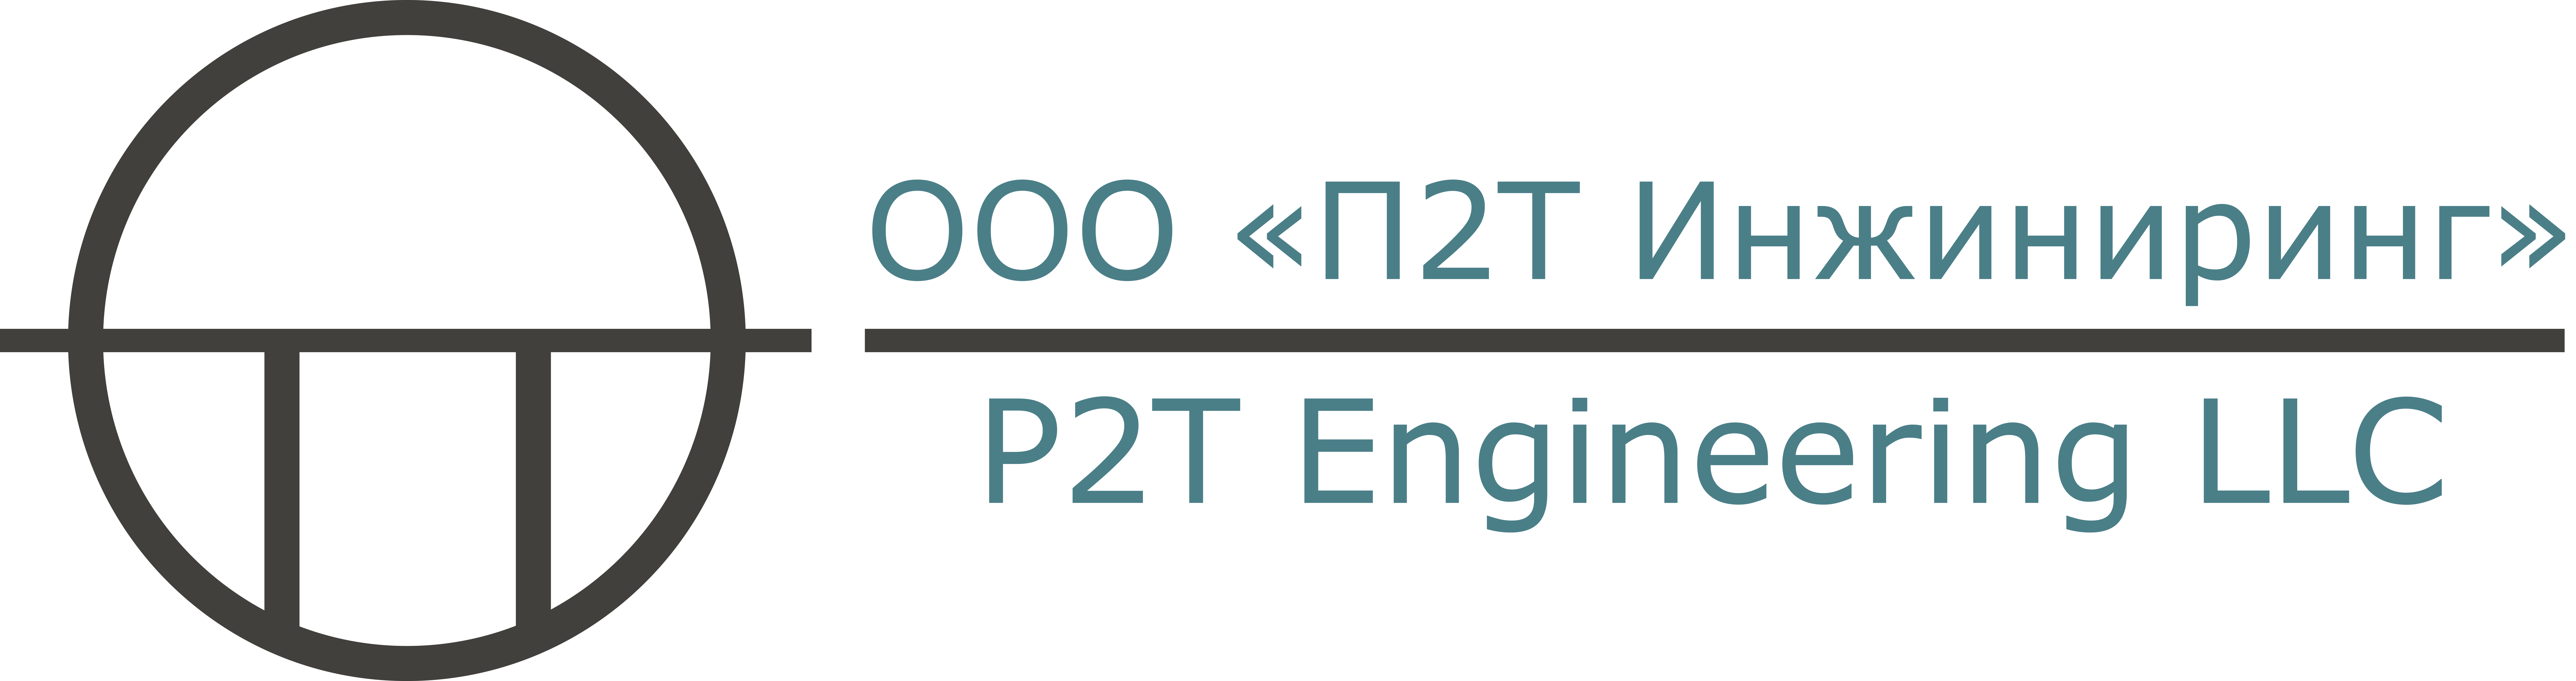 P2T Engineering